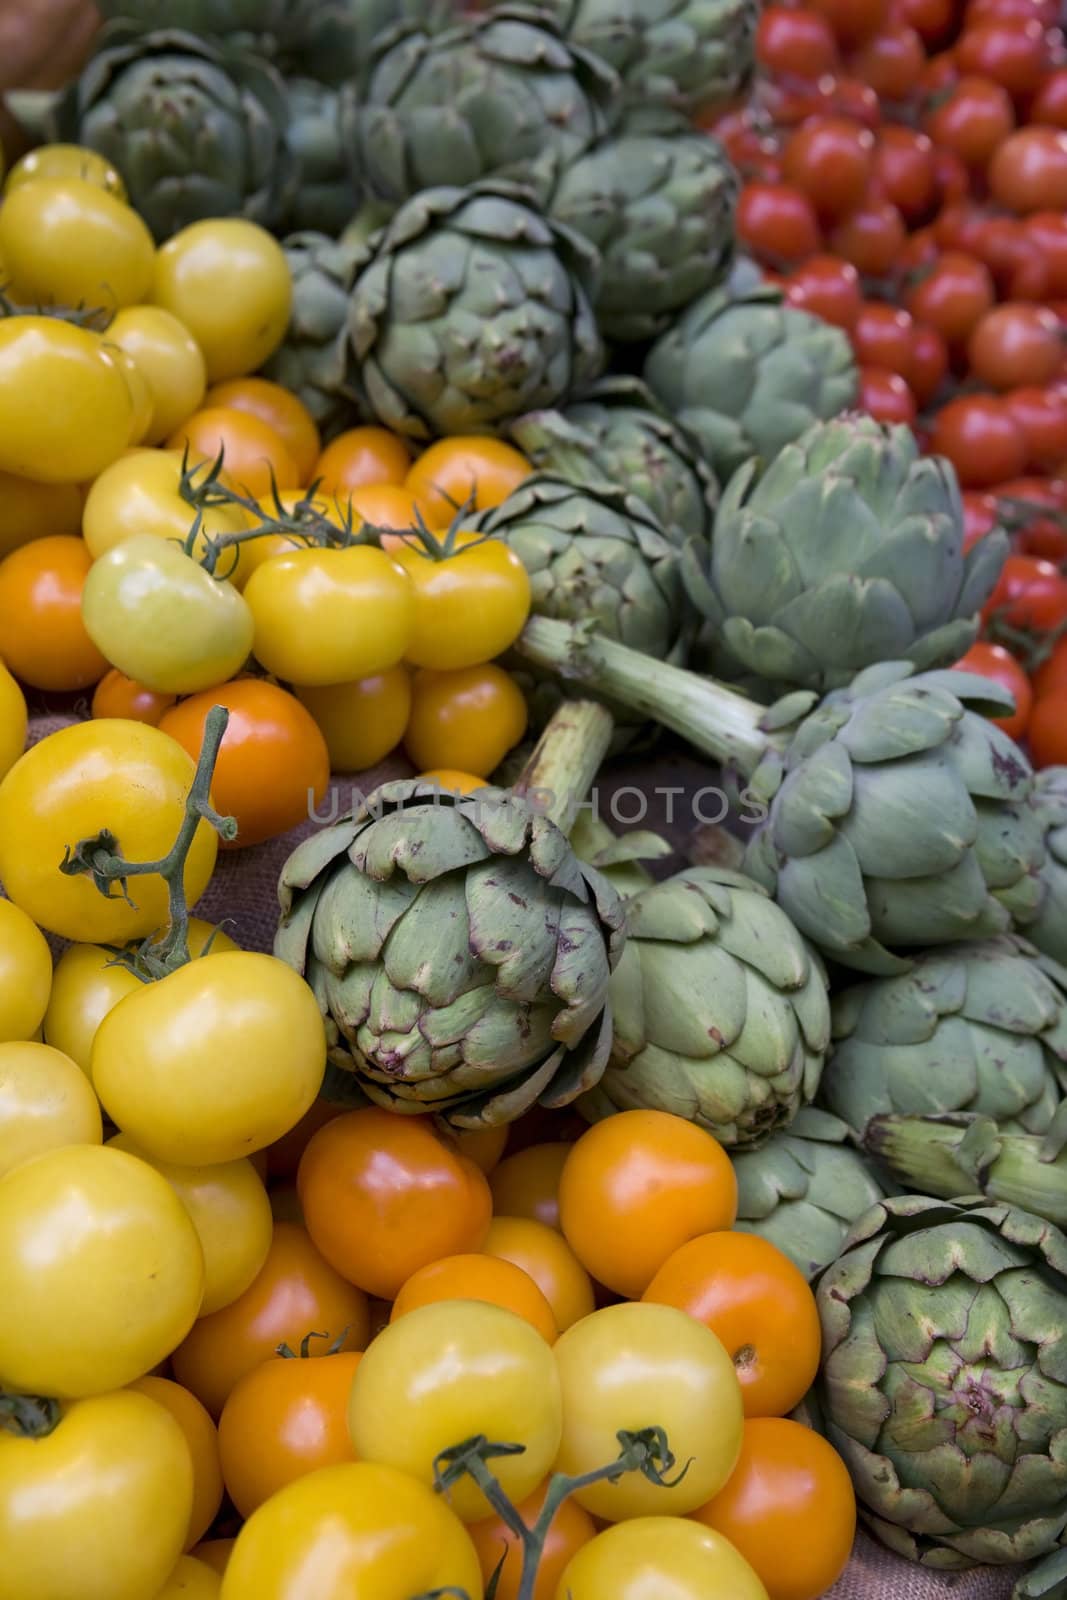 vegetables in grossery shop by elenarostunova